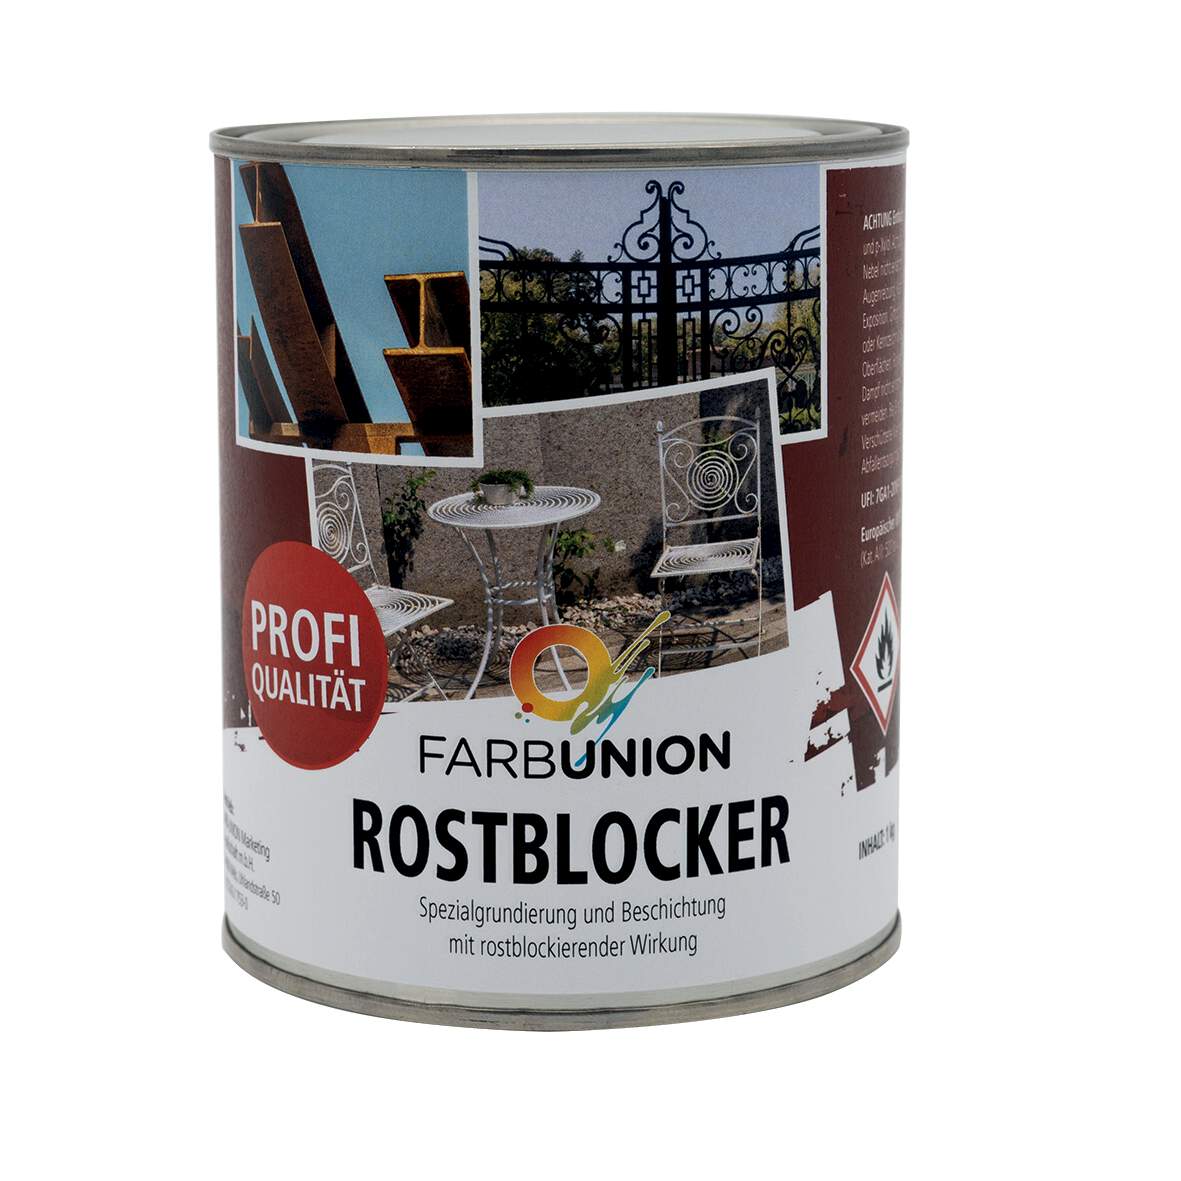 1256869 - Rostblocker rotbraun 0,5kg 